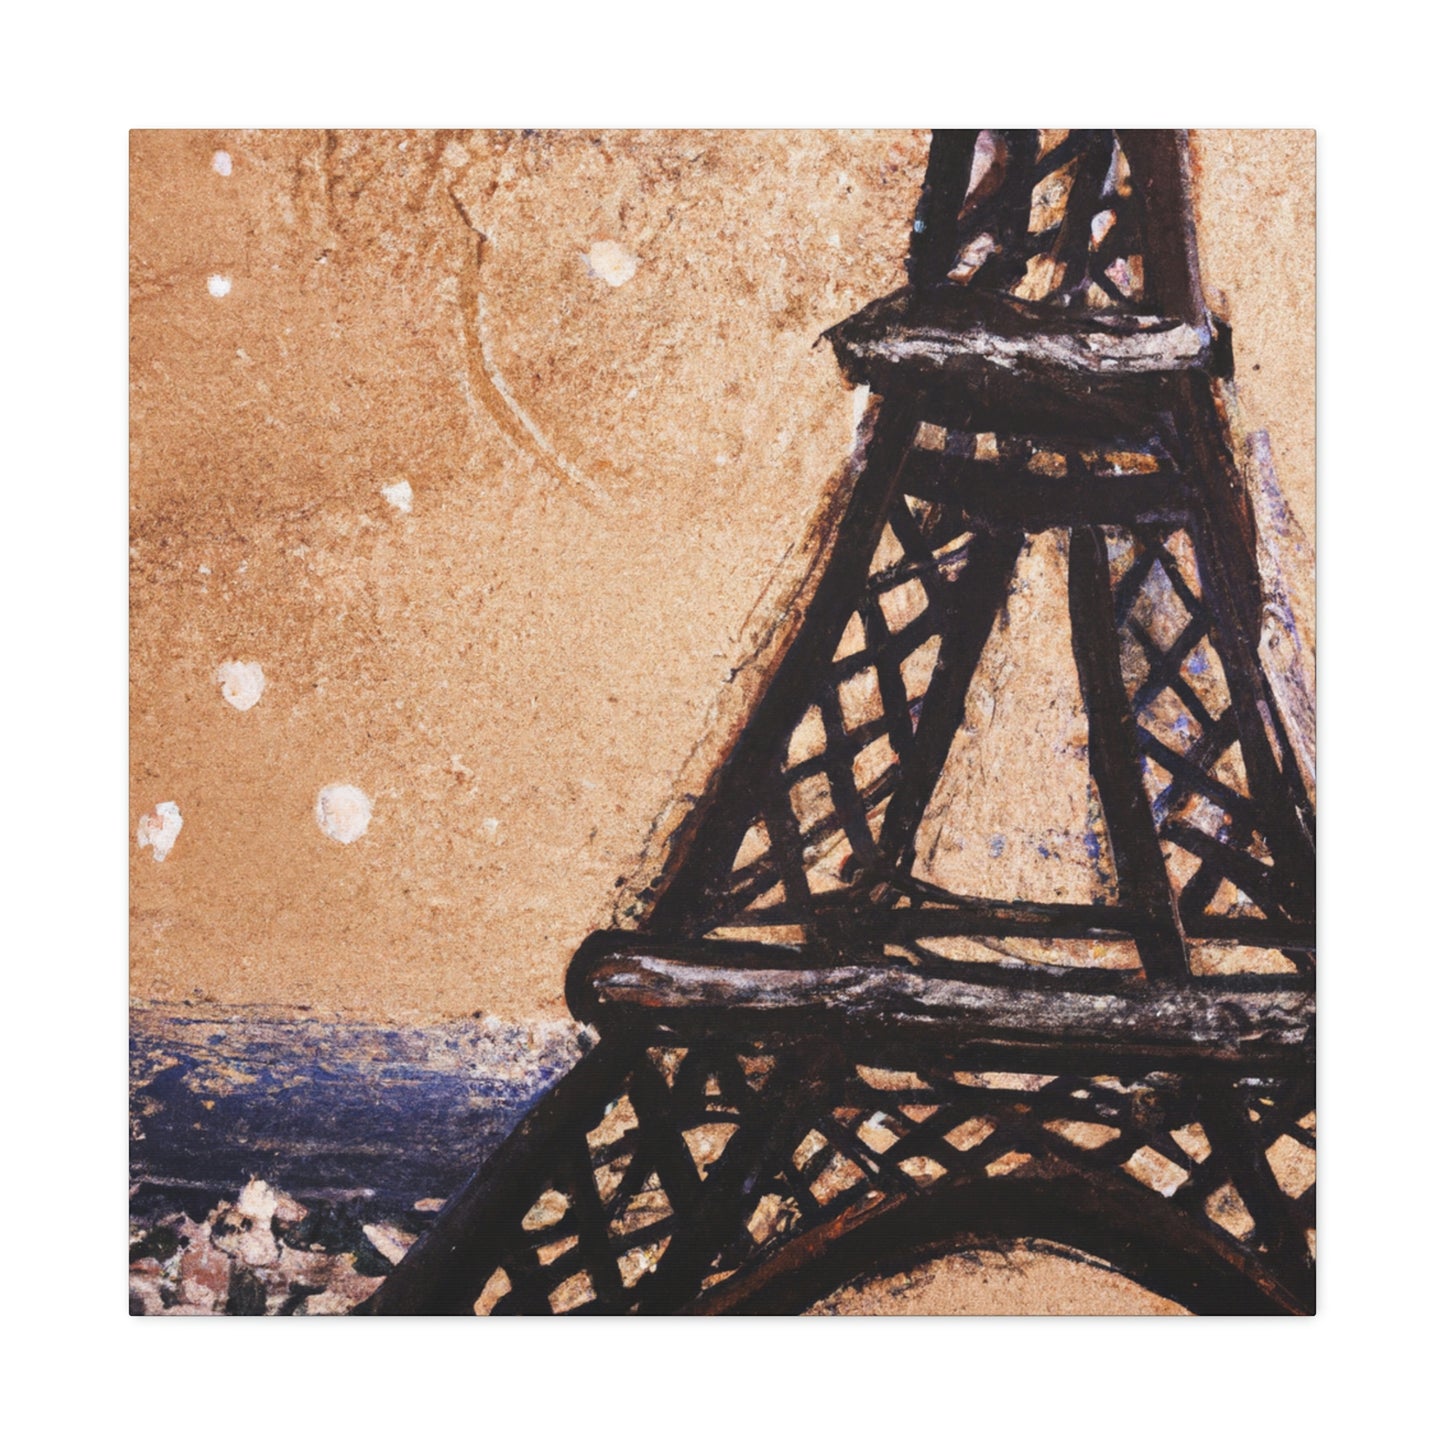 Jacques Le Grande - Eiffel Tower Canvas Wall Art